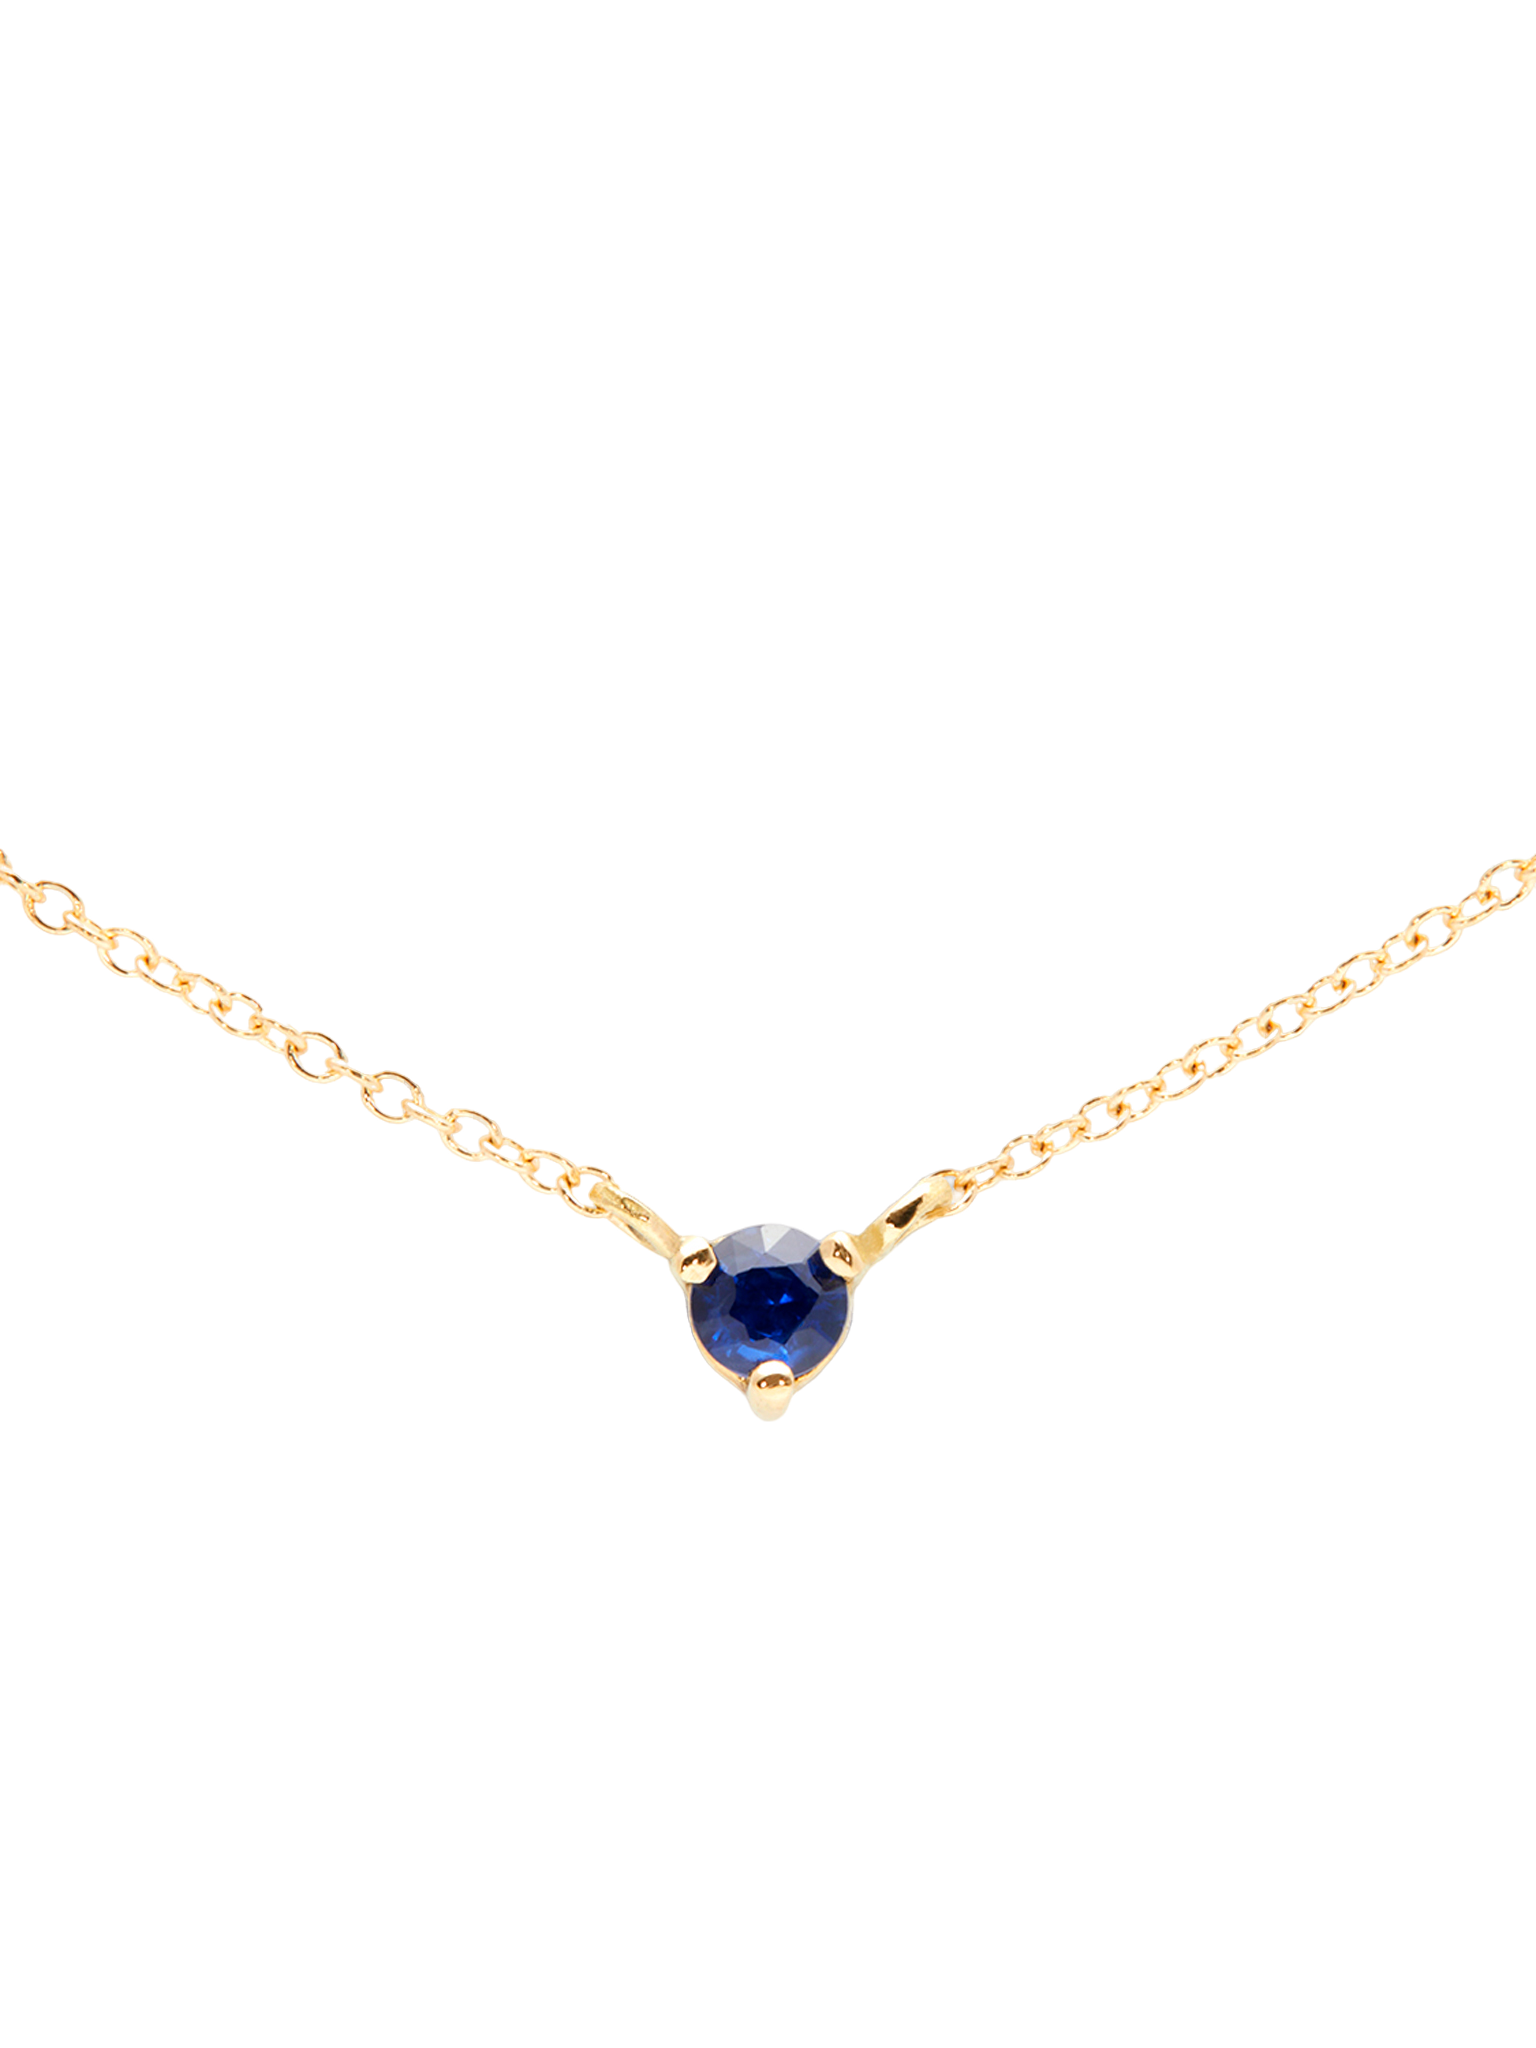 Birthstone blue sapphire necklace